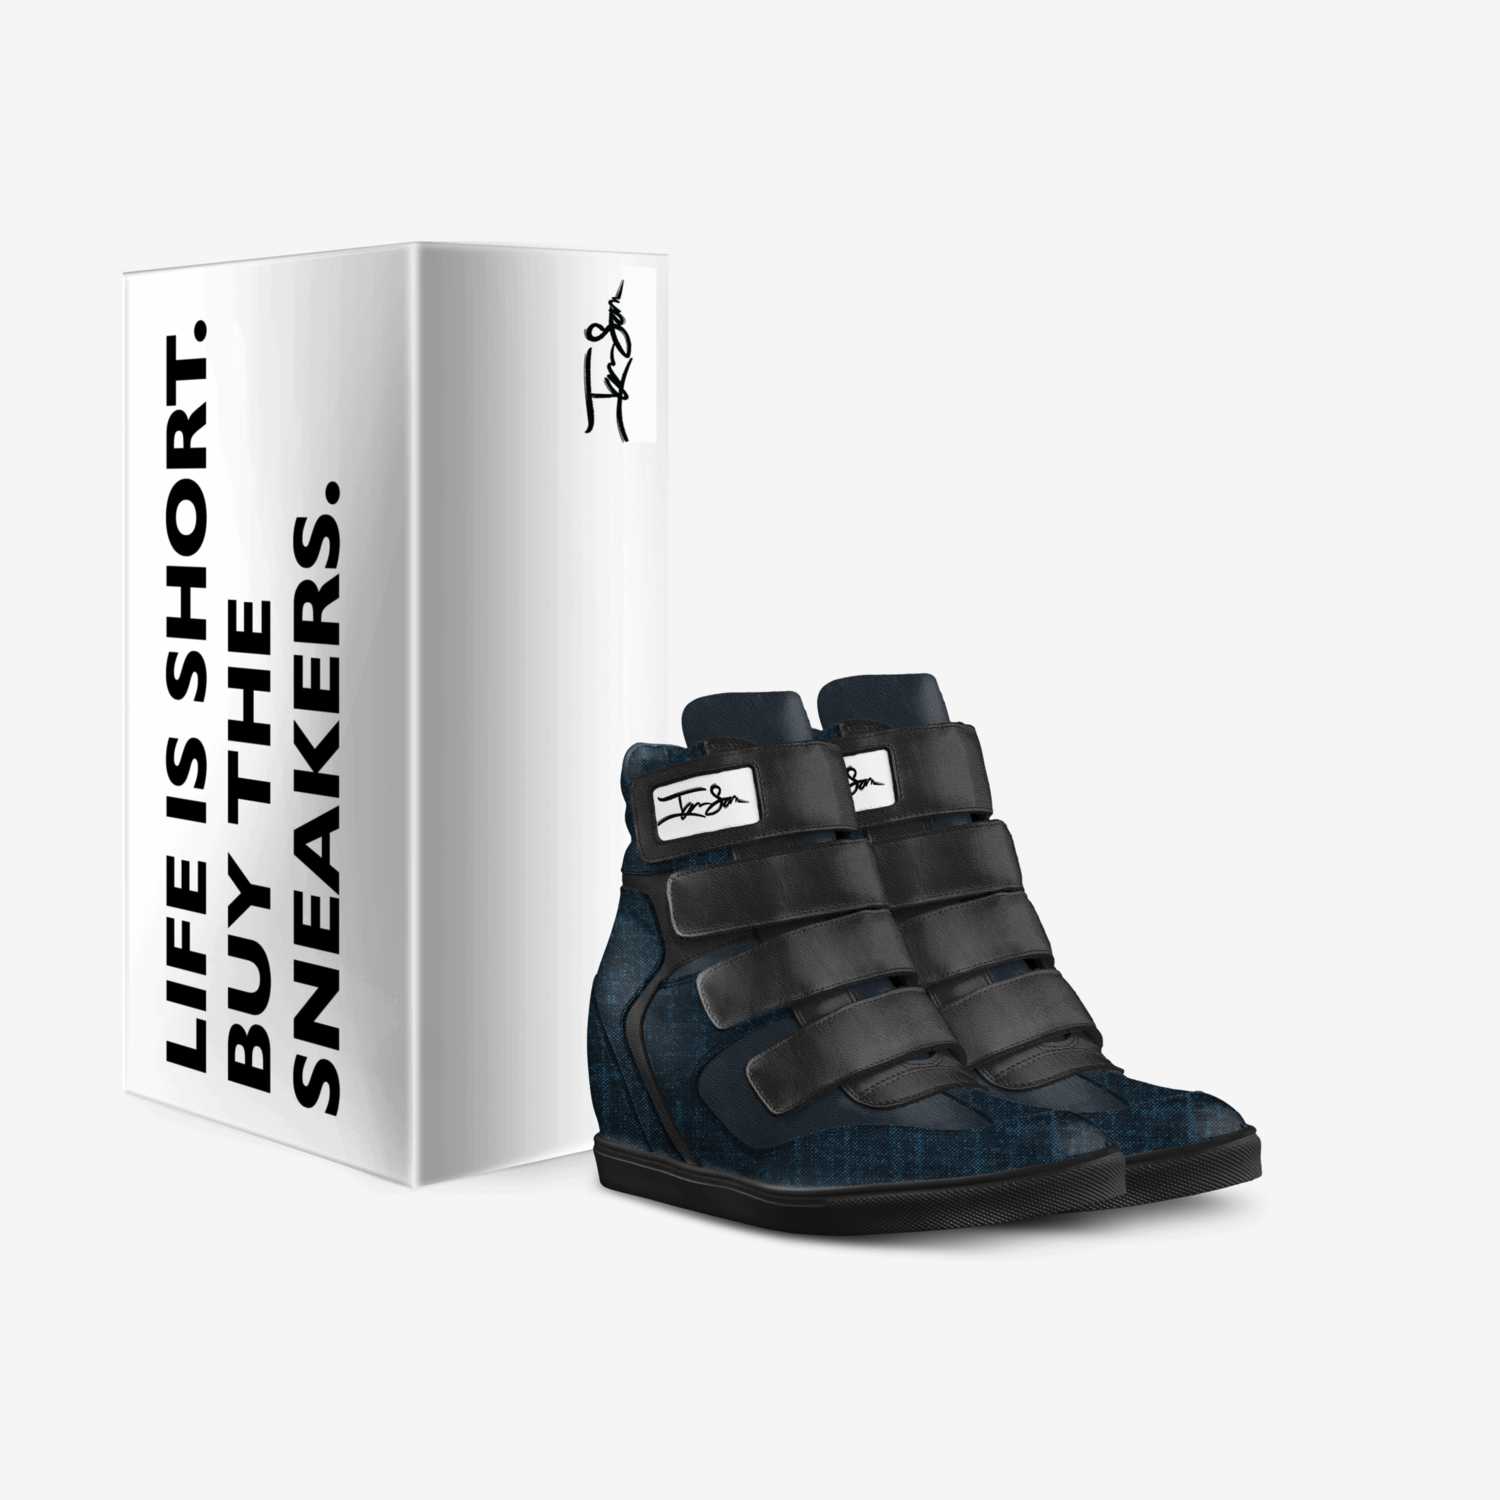 IamSam custom made in Italy shoes by Shakira Moran | Box view